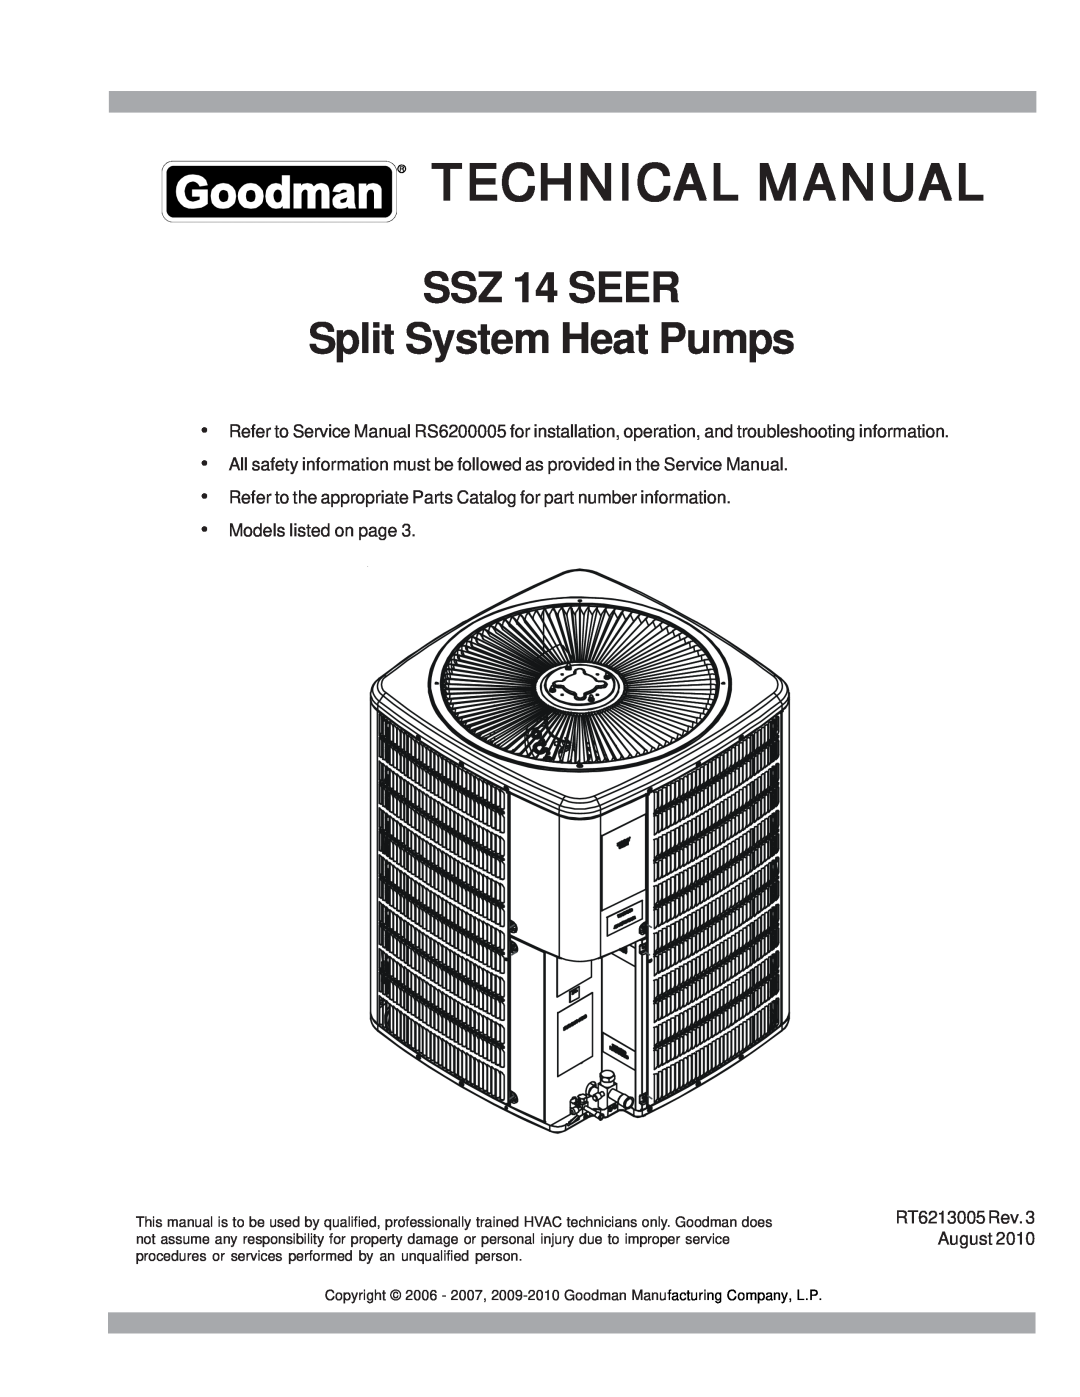 Goodman Mfg service manual SSZ 14 SEER Split System Heat Pumps, Technical Manual 